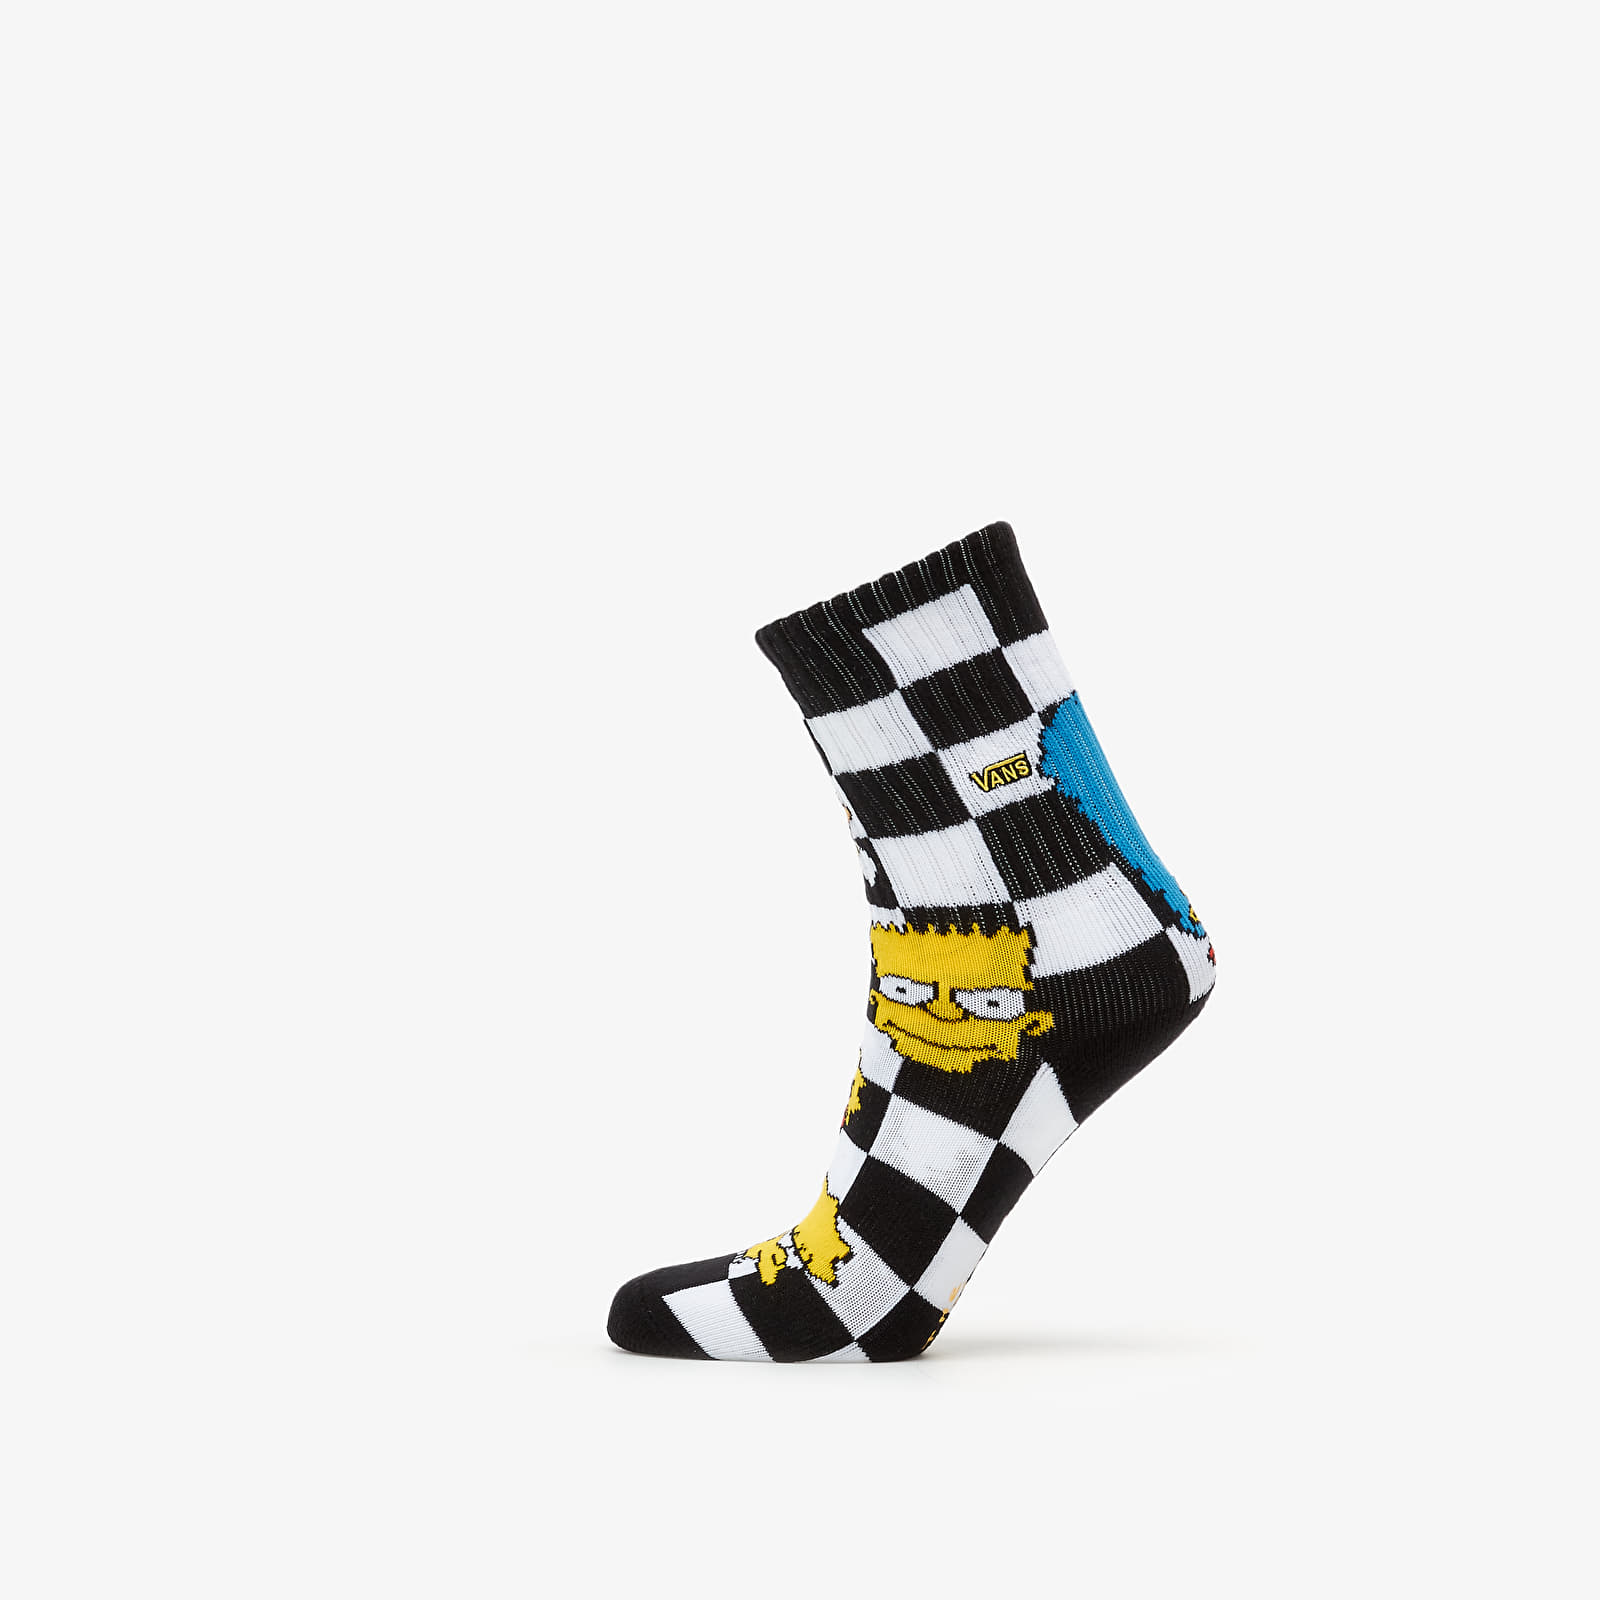 Șosete Vans x The Simpsons Socks Multicolor